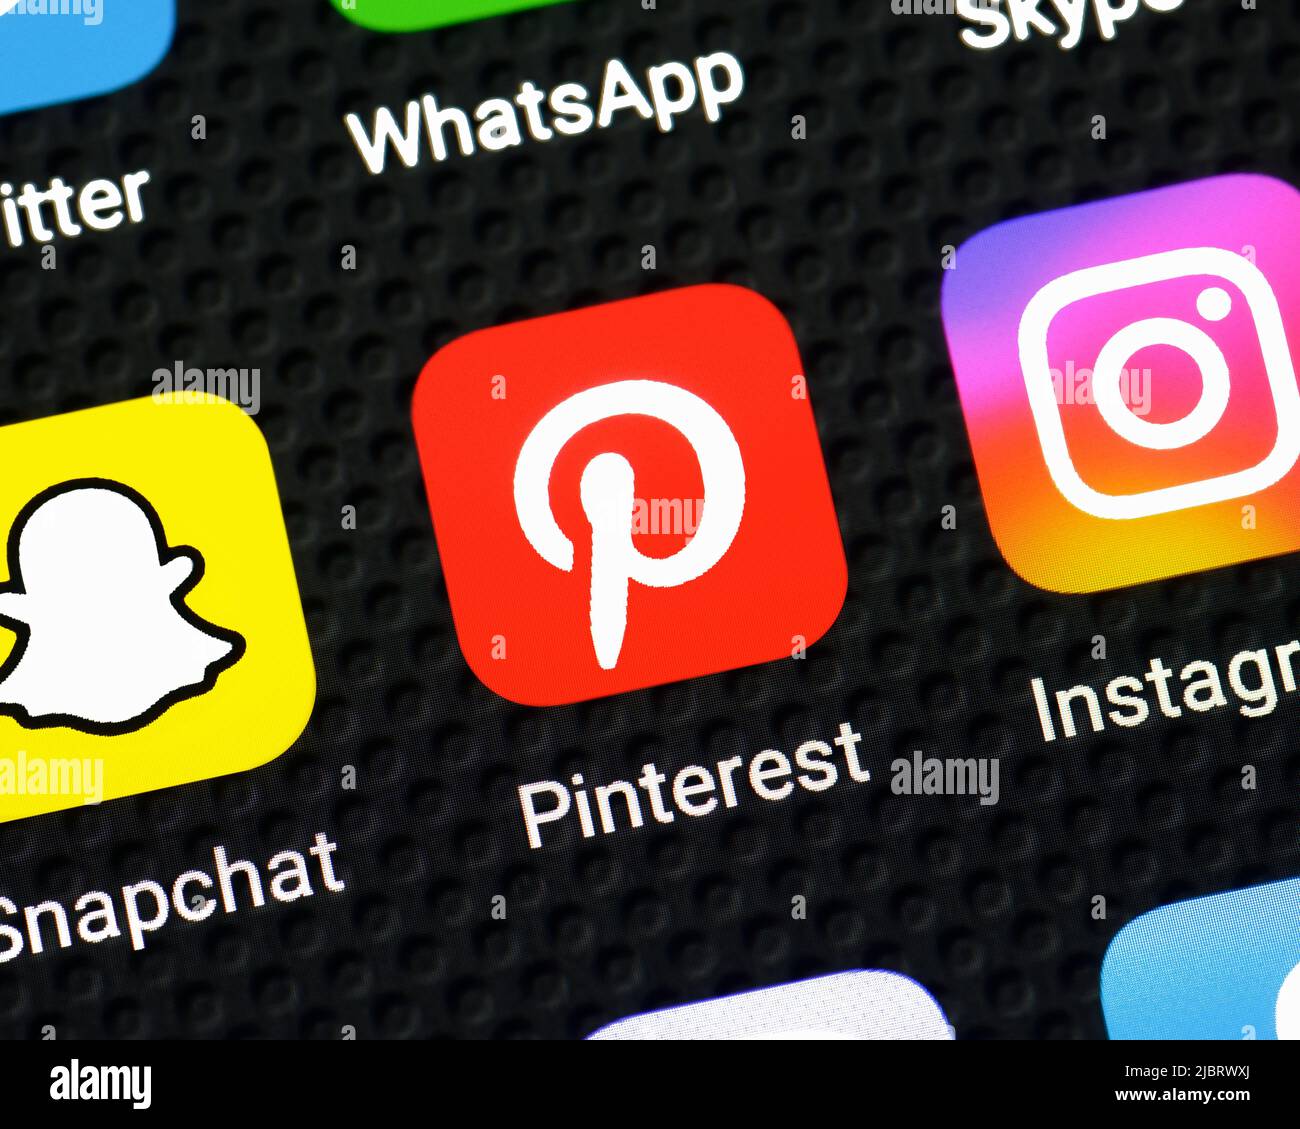 Pinterest App on a Smartphone, Close Up Stock Photo